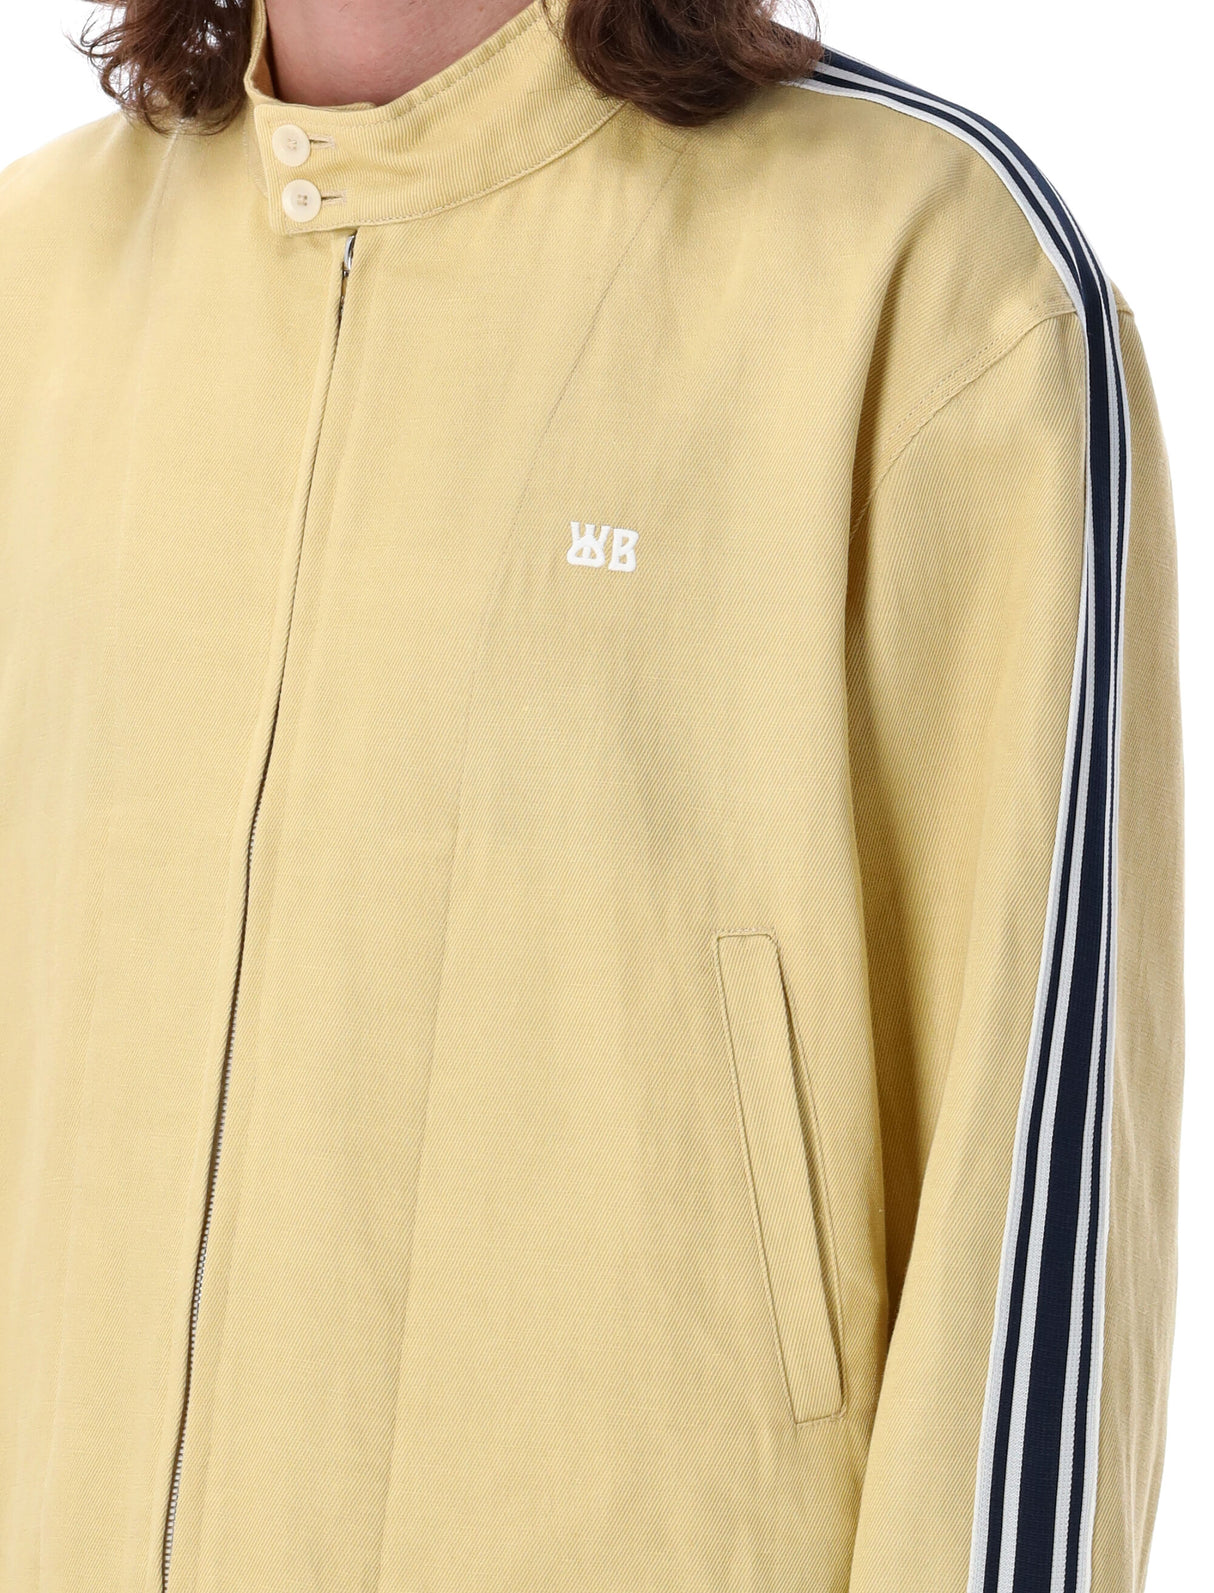 WALES BONNER Men's Cotton and Linen Blend Addis Harrington Jacket in Parsnip for SS24